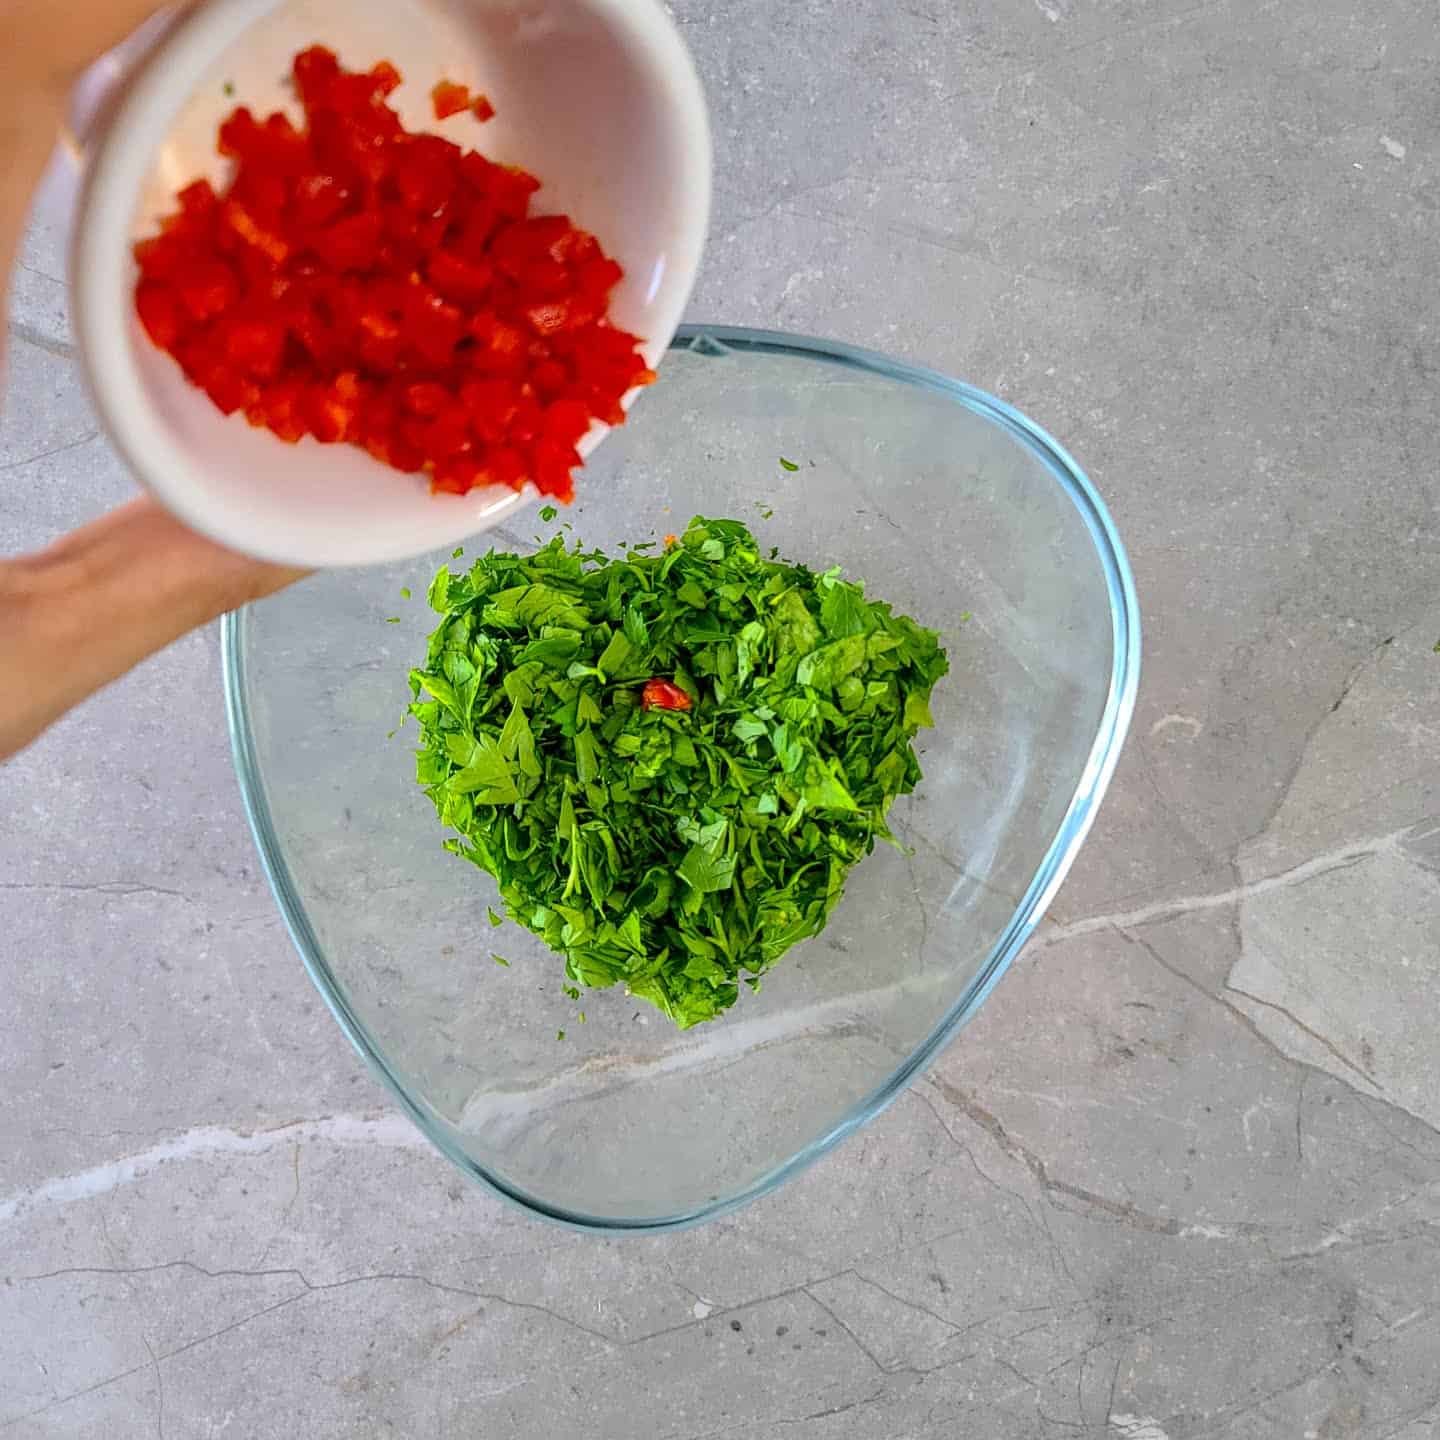 Add minced red chili pepper.